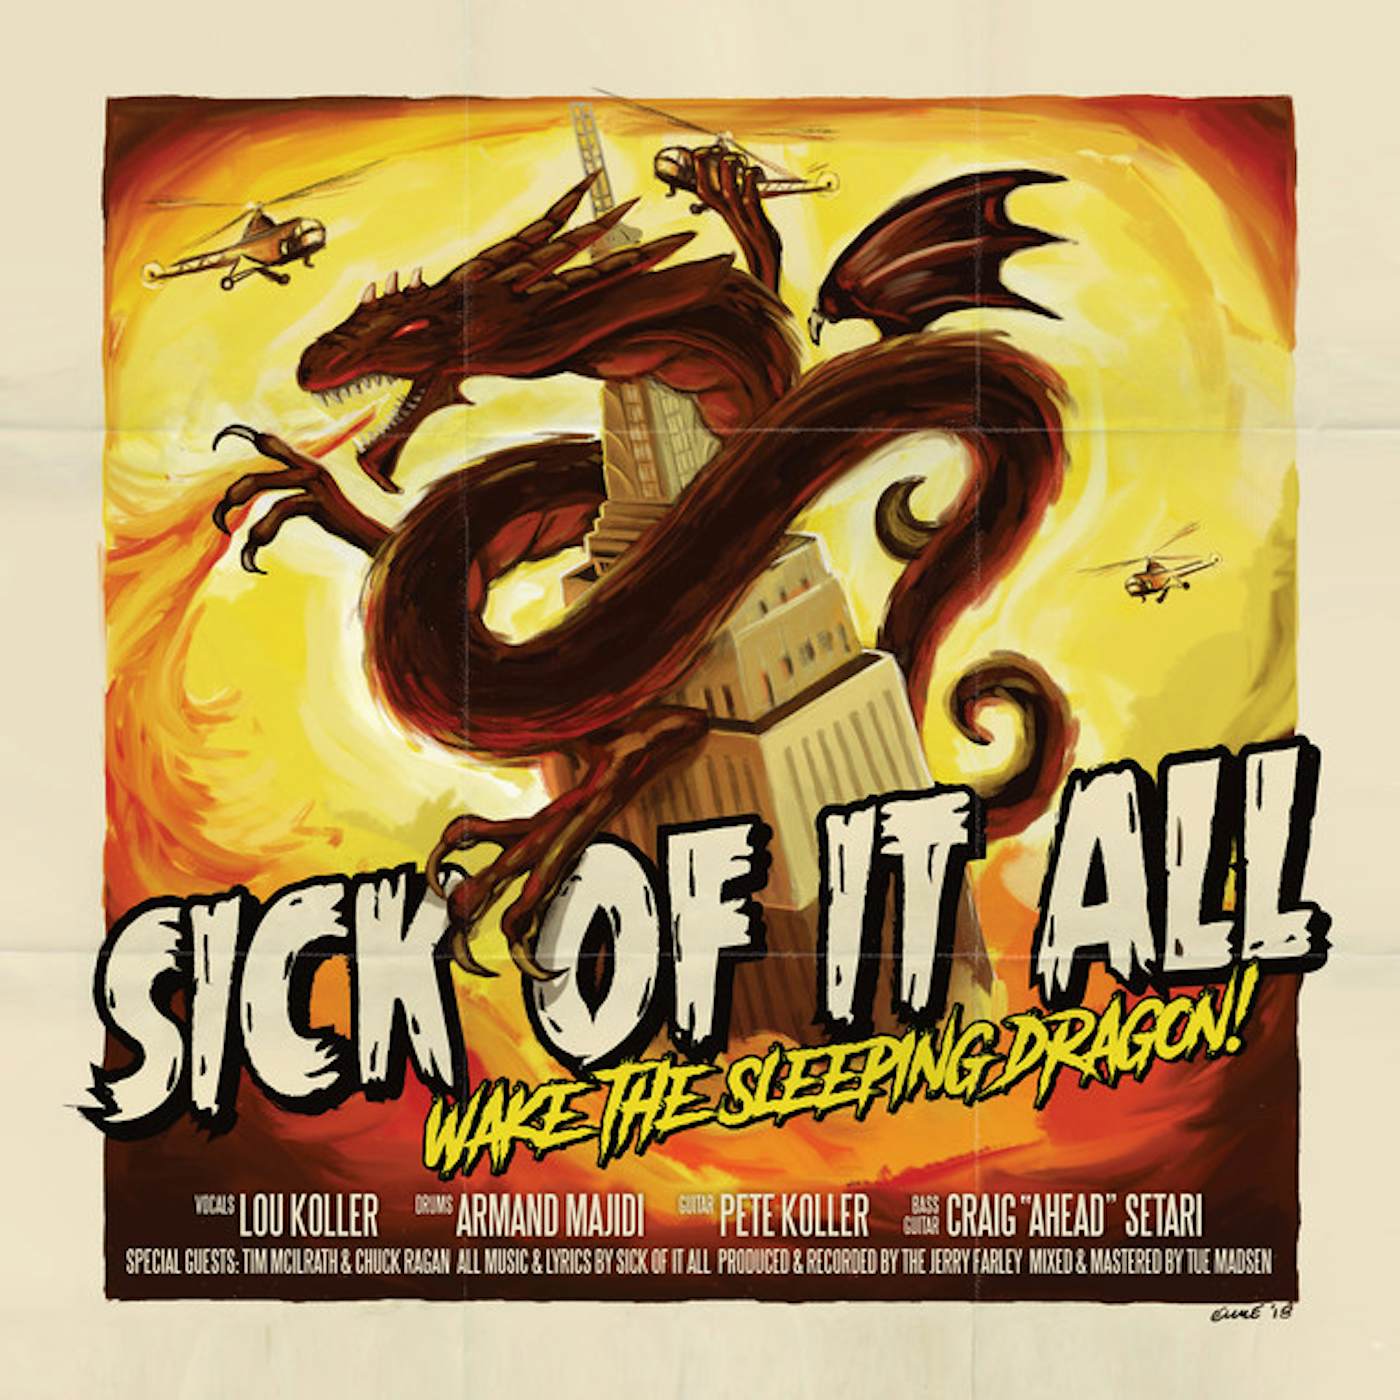 Sick Of It All Wake the Sleeping Dragon Vinyl Record